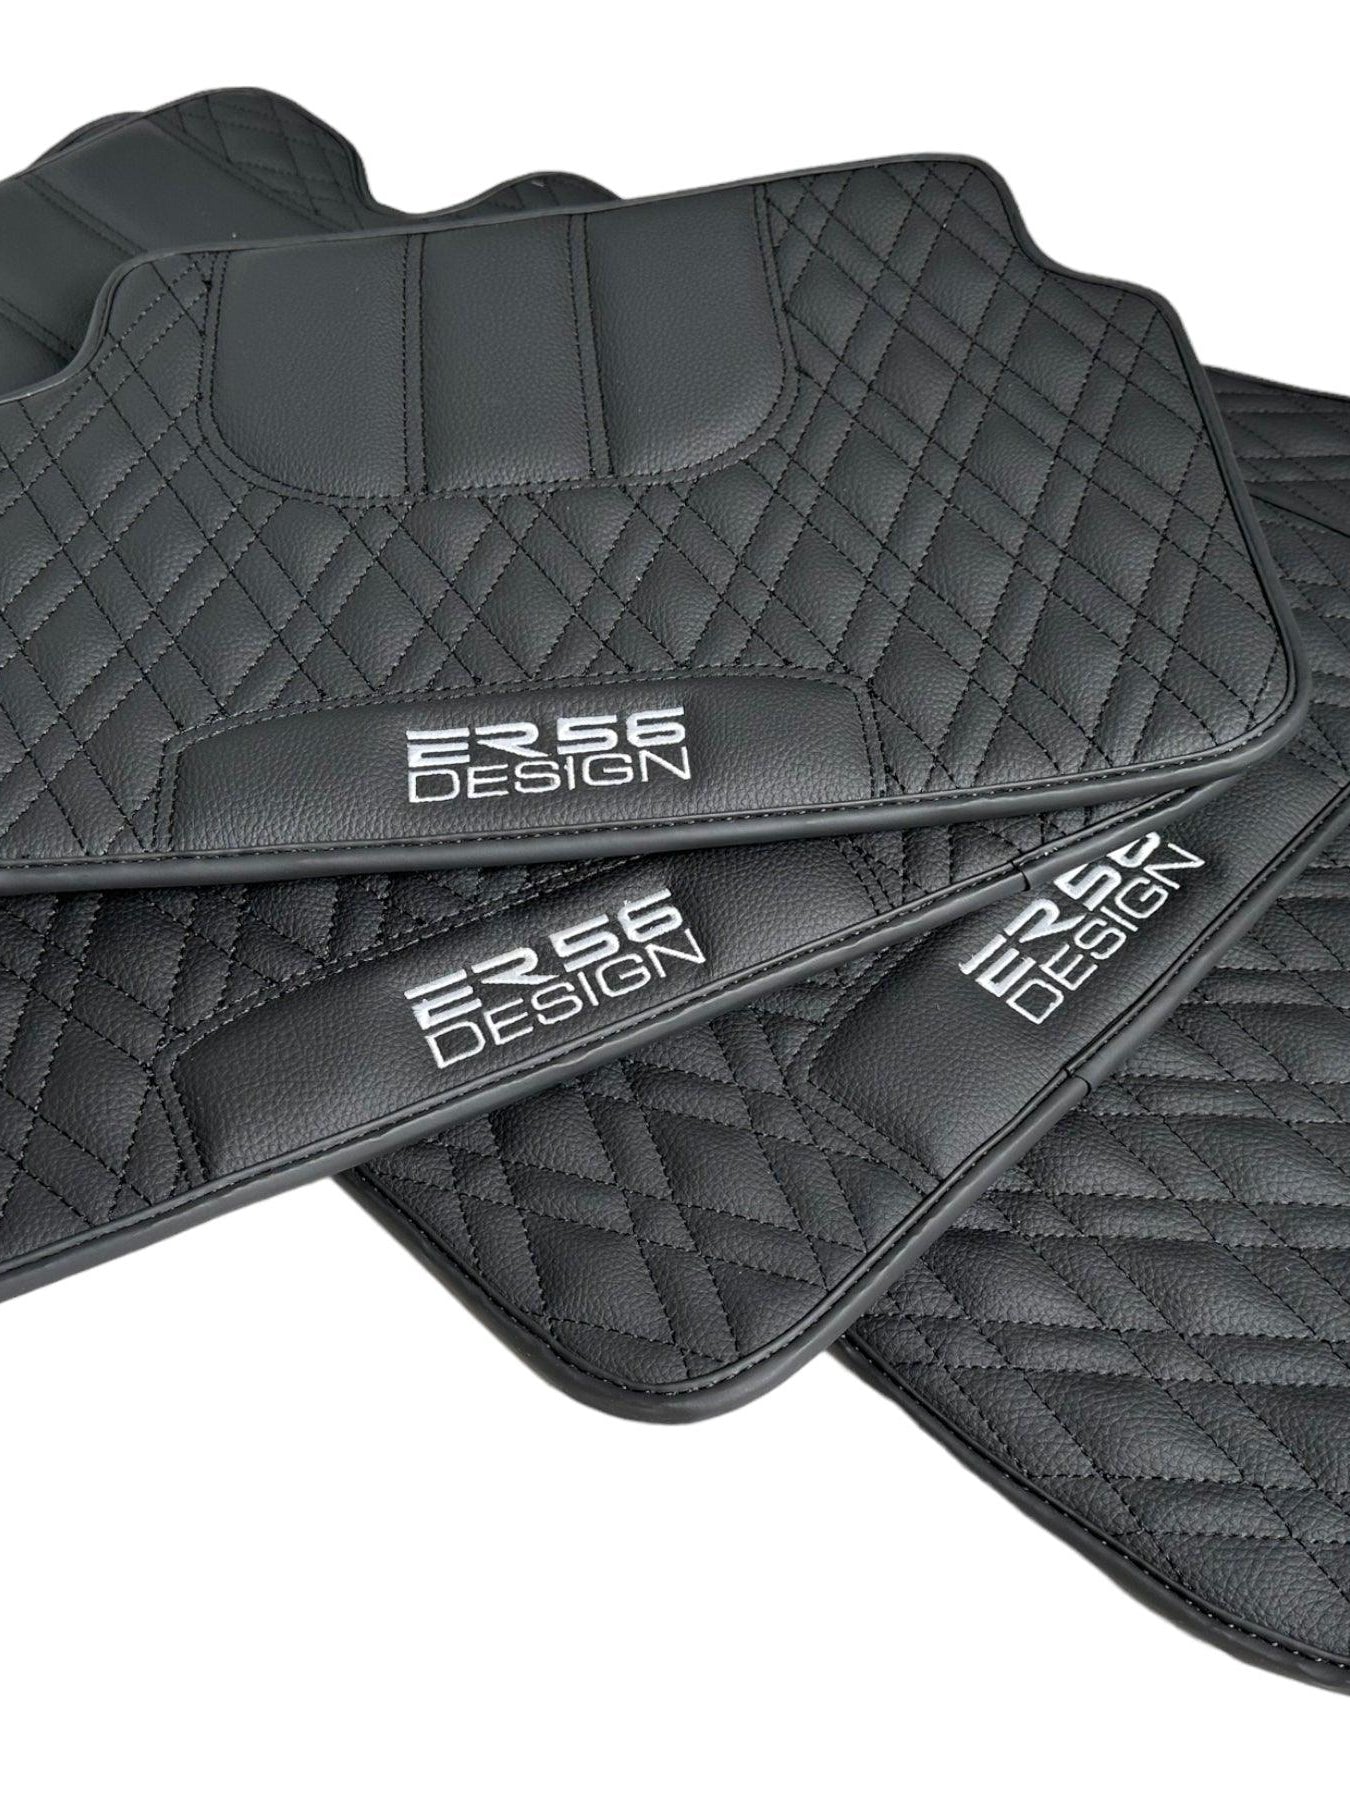 Floor Mats For BMW M4 Series F83 Black Leather Er56 Design - AutoWin